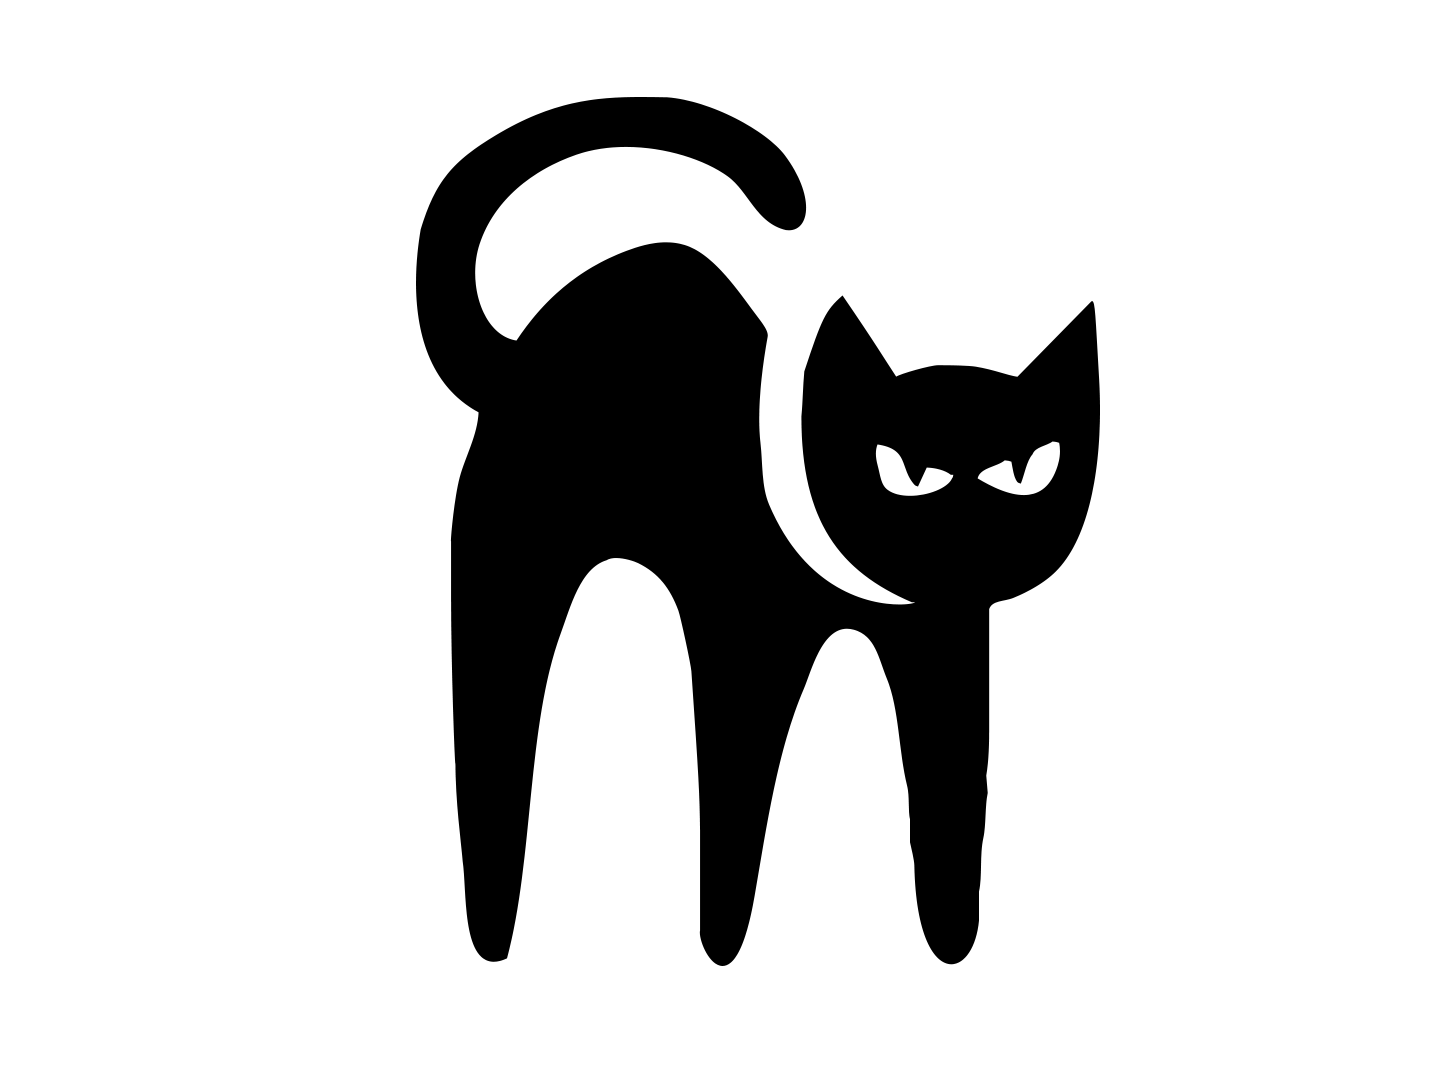 blackcat bad actor hacker ransomware logo